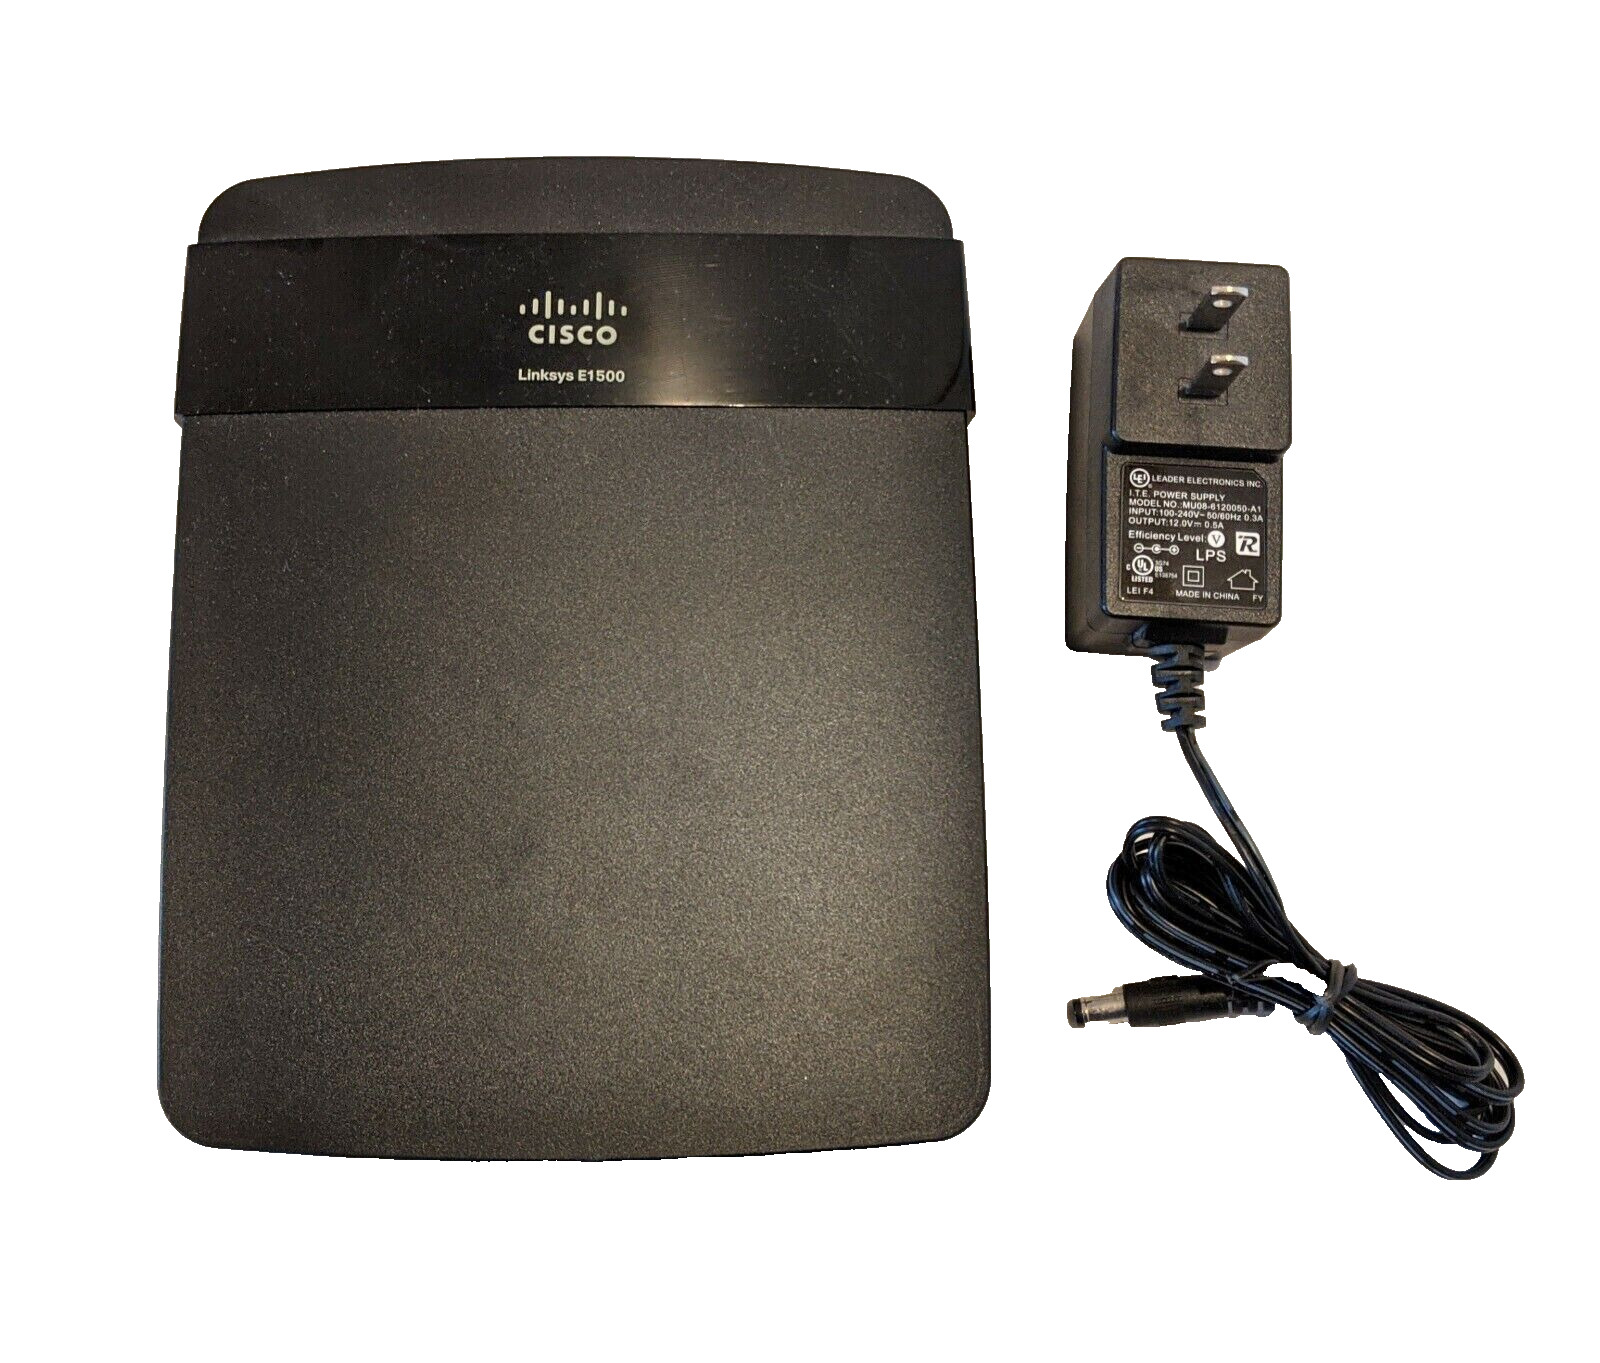 Cisco Linksys E1500 4-Port 300MB Wireless Network Router W/ 4 Port Switch